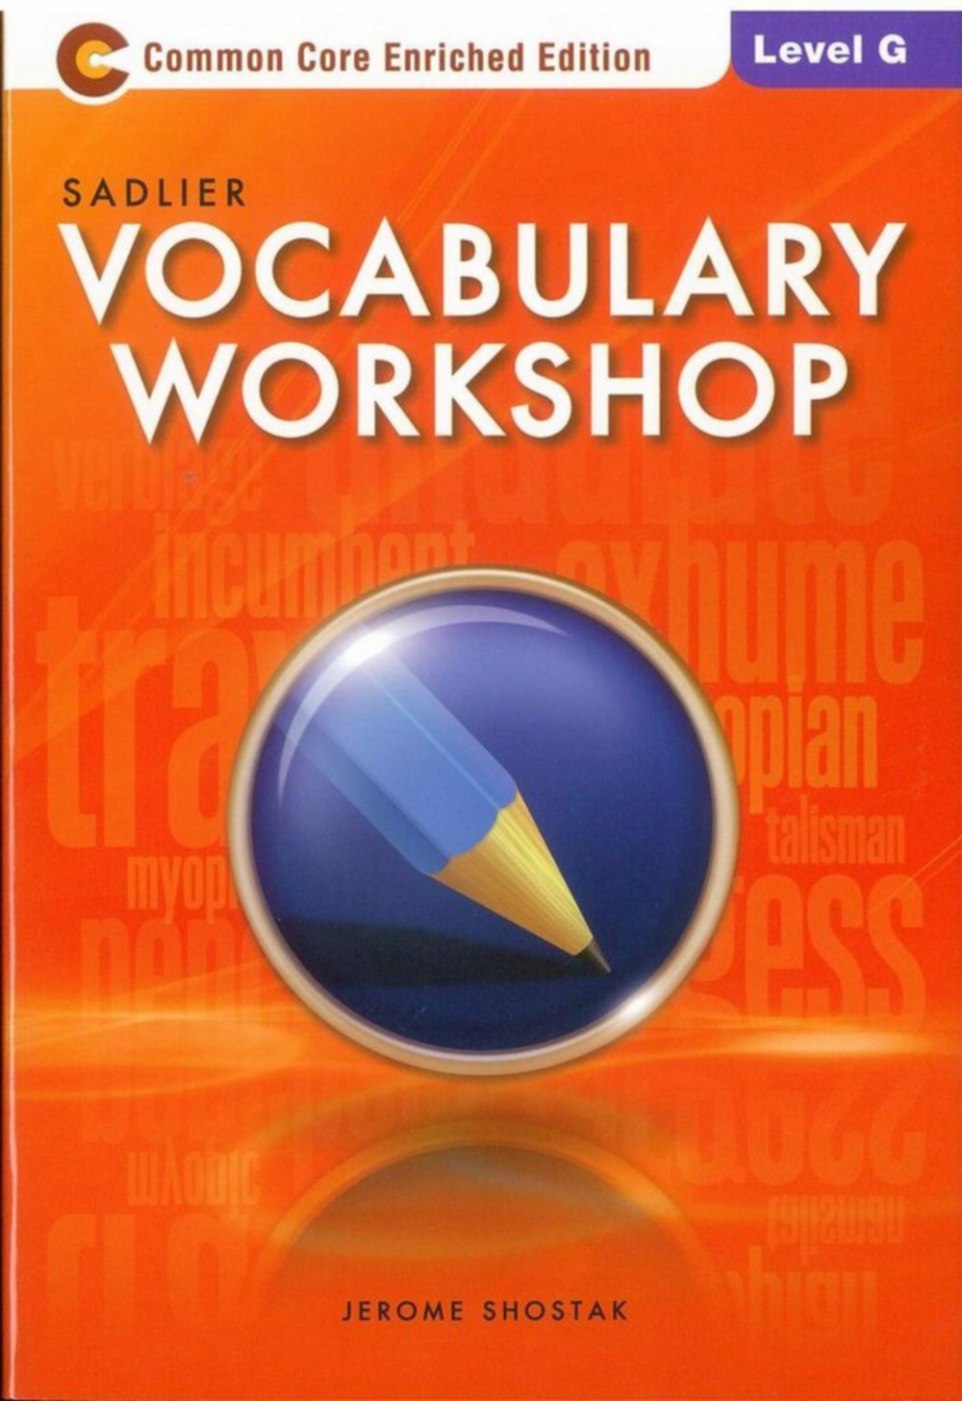 Sadlier Vocabulary Workshop Level G (Common Core Enriched Edition )